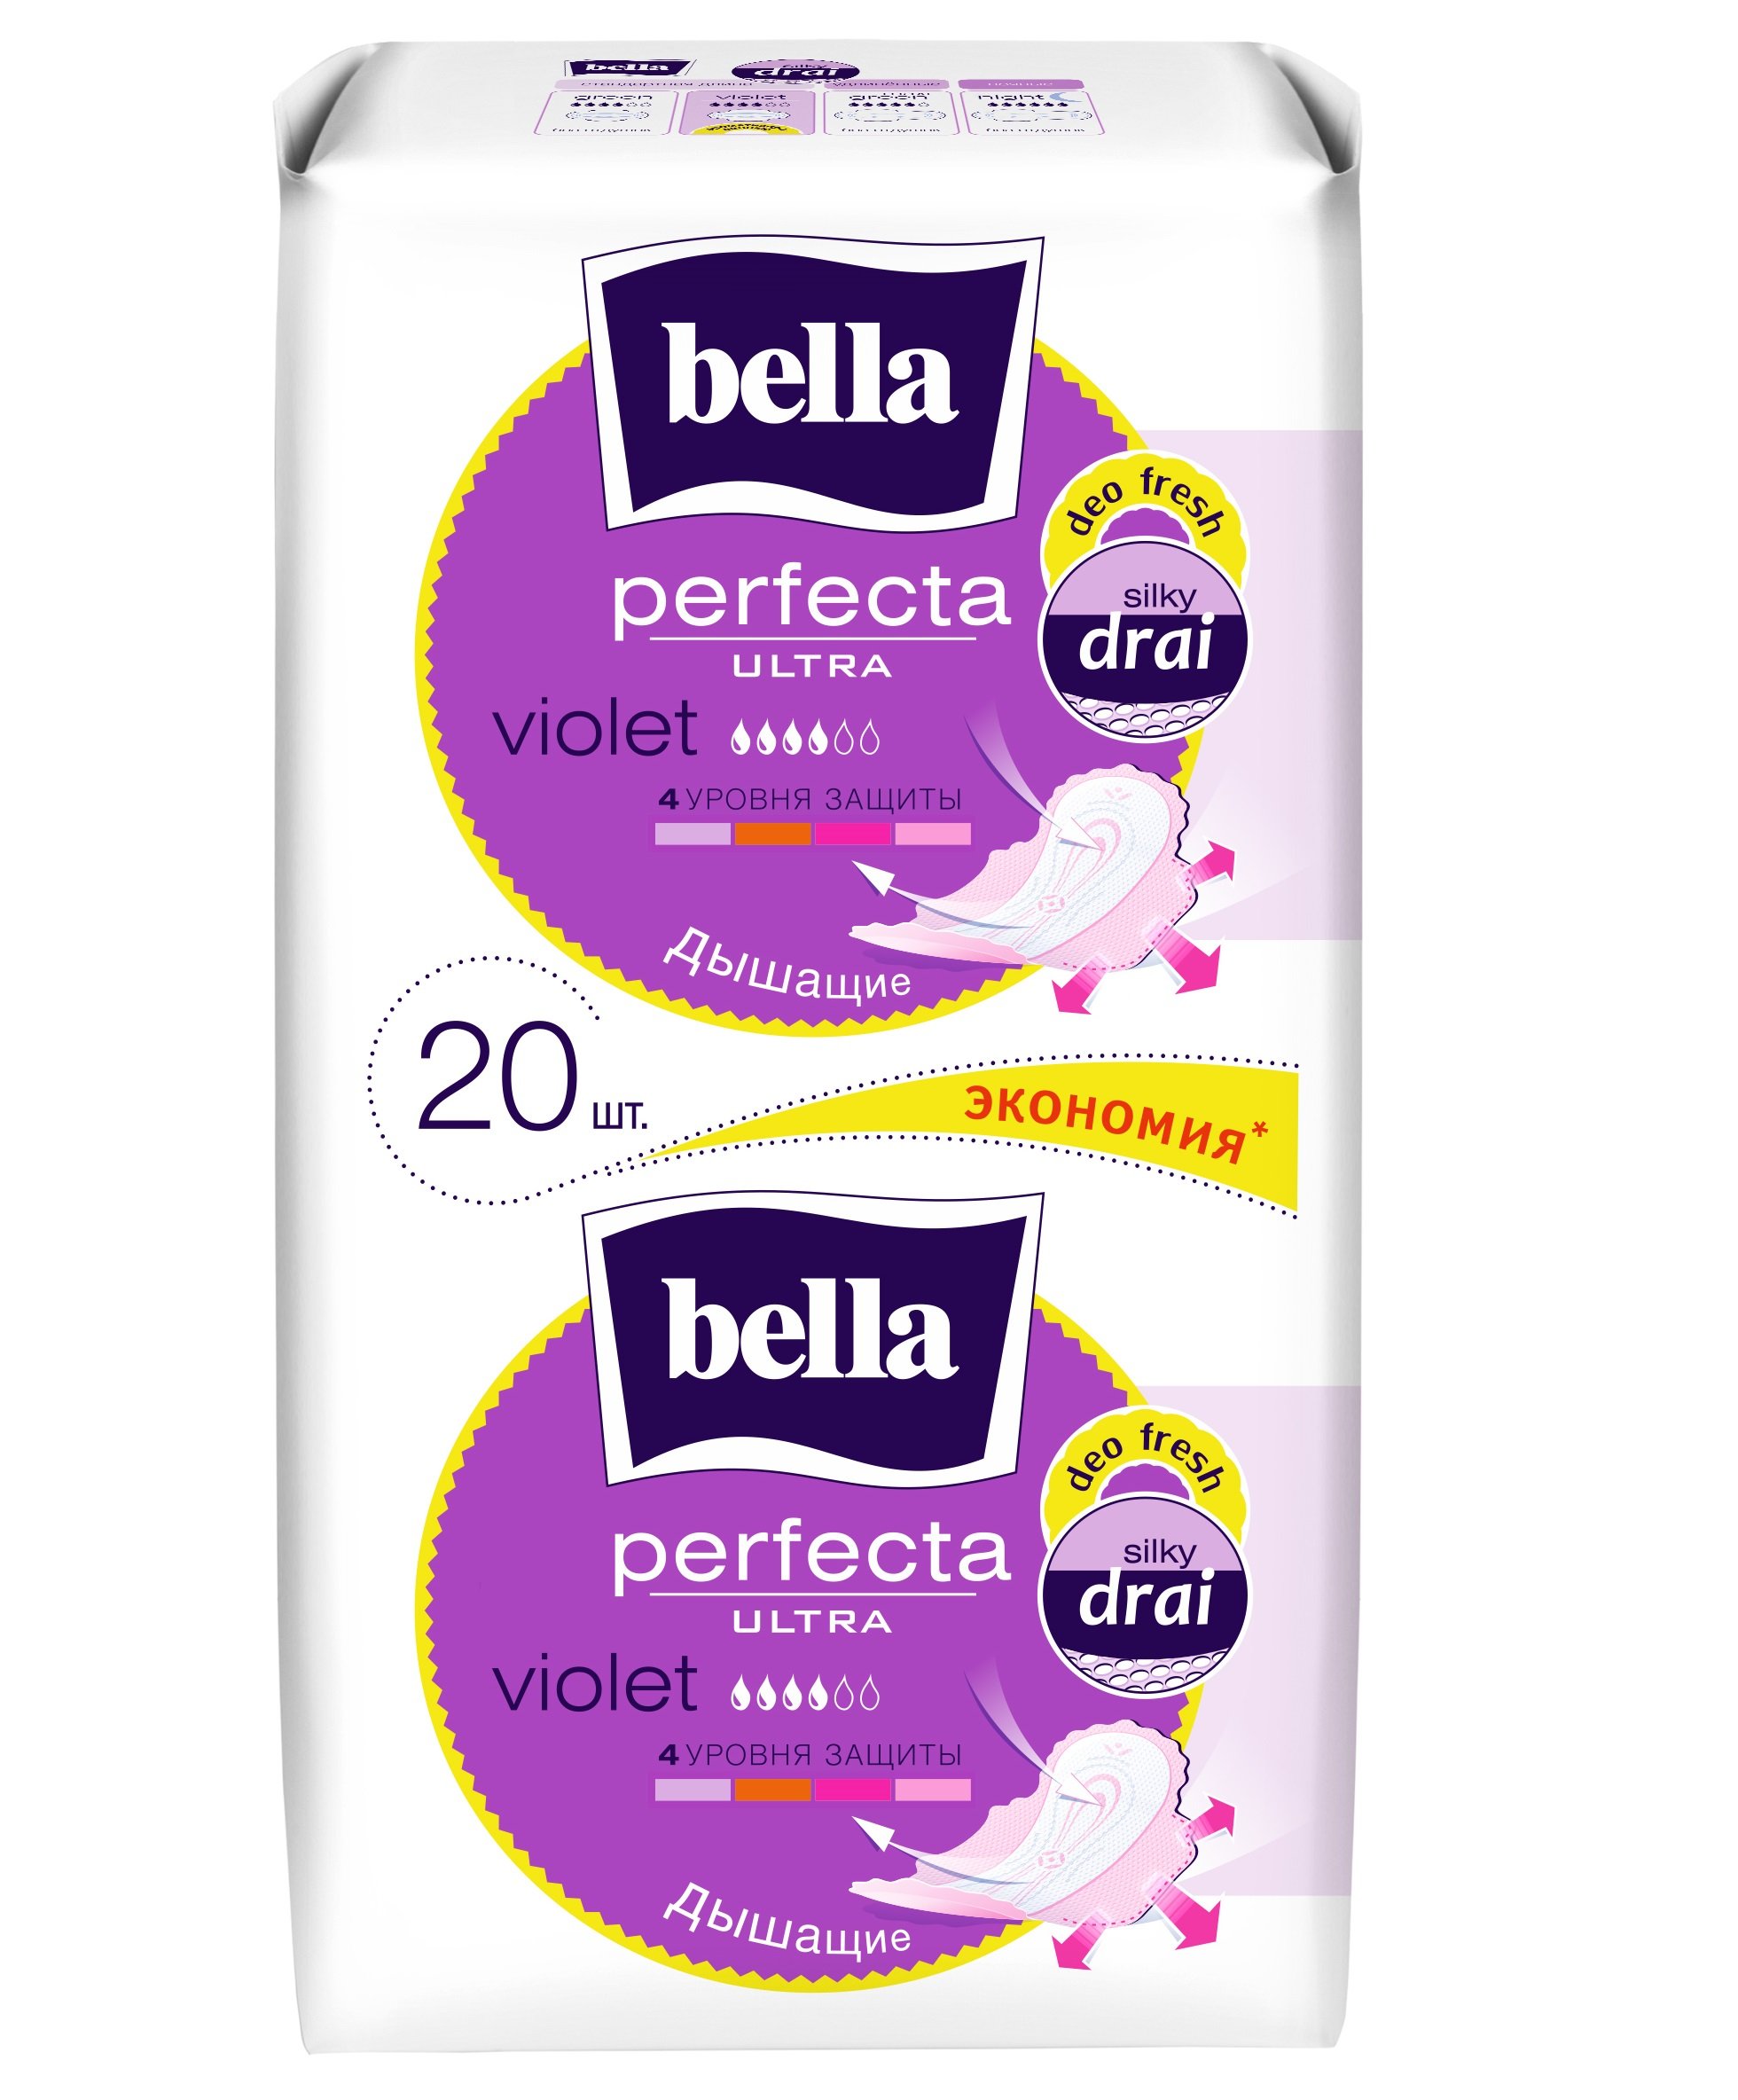 Гигиенические прокладки Bella Perfecta Ultra Violet deo fresh, 20 шт. - фото 1